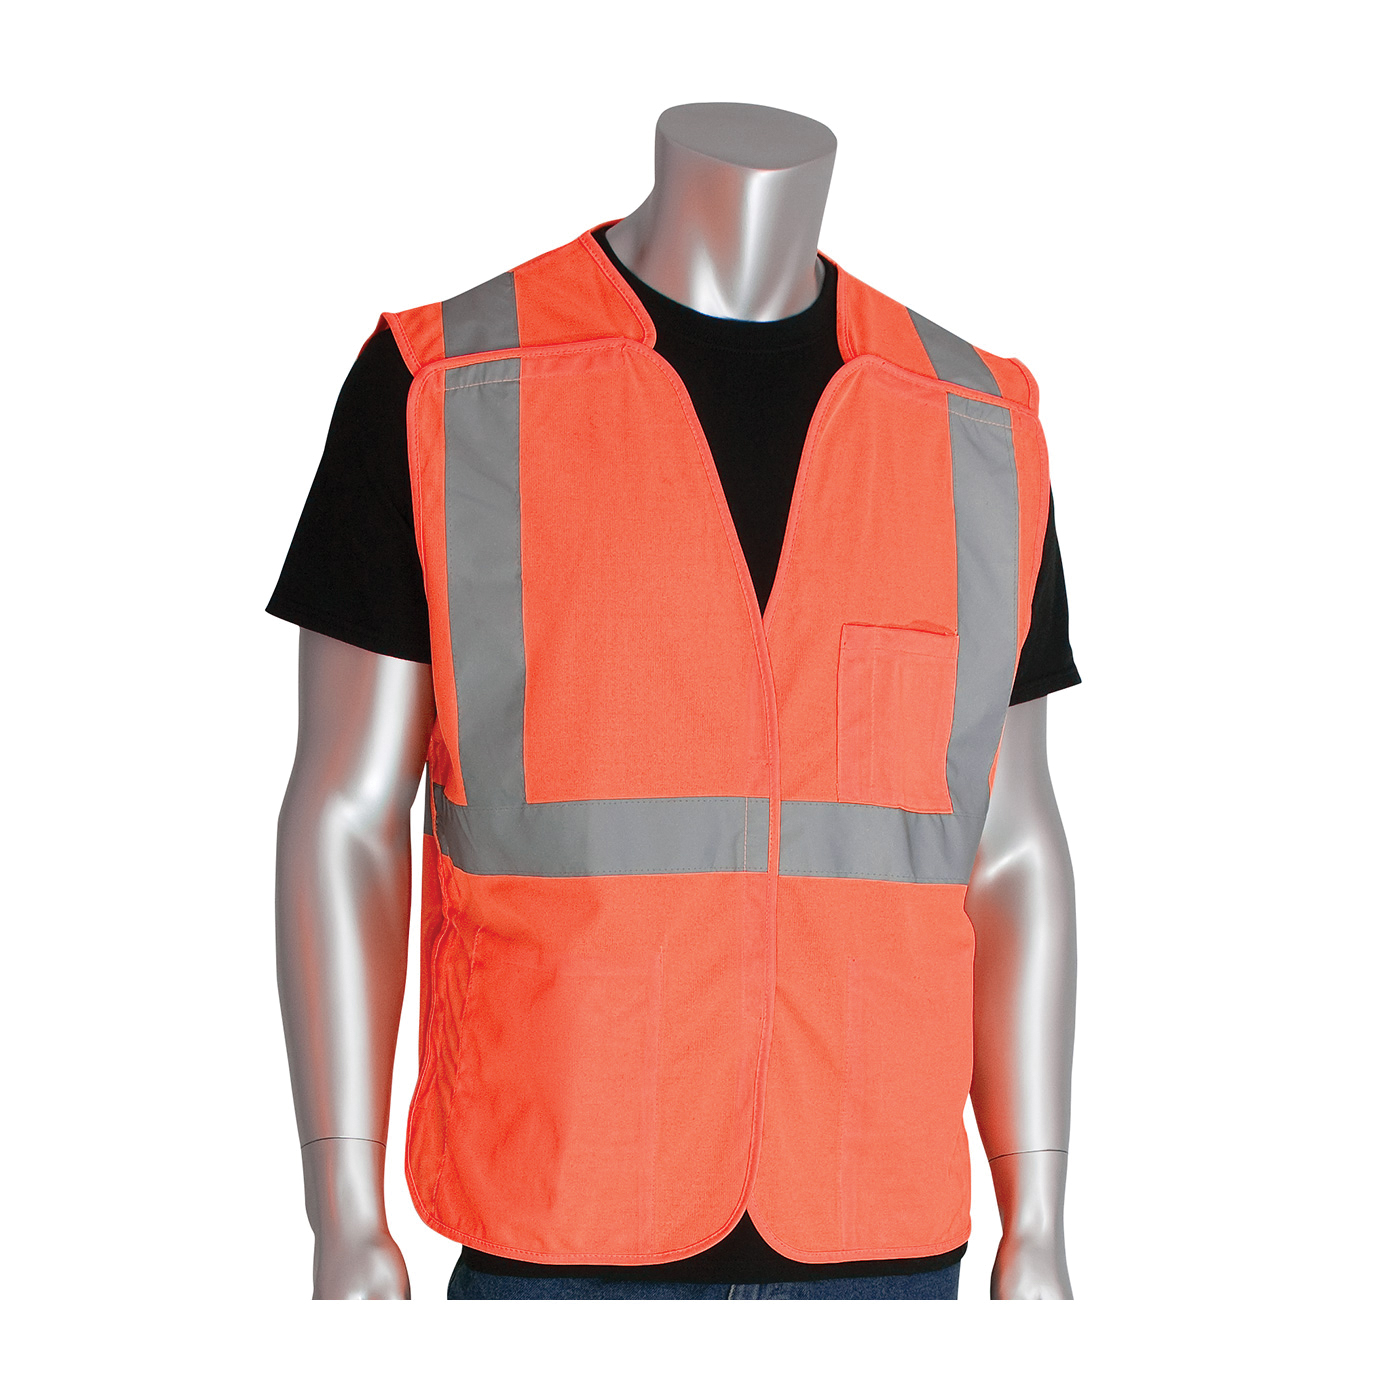 PIP® 302-5PVOR-M Safety Vest, M, Hi-Viz Orange, Polyester, Hook and Loop Closure, 3 Pockets, ANSI Class: Class 2, Specifications Met: ANSI 107 Type R